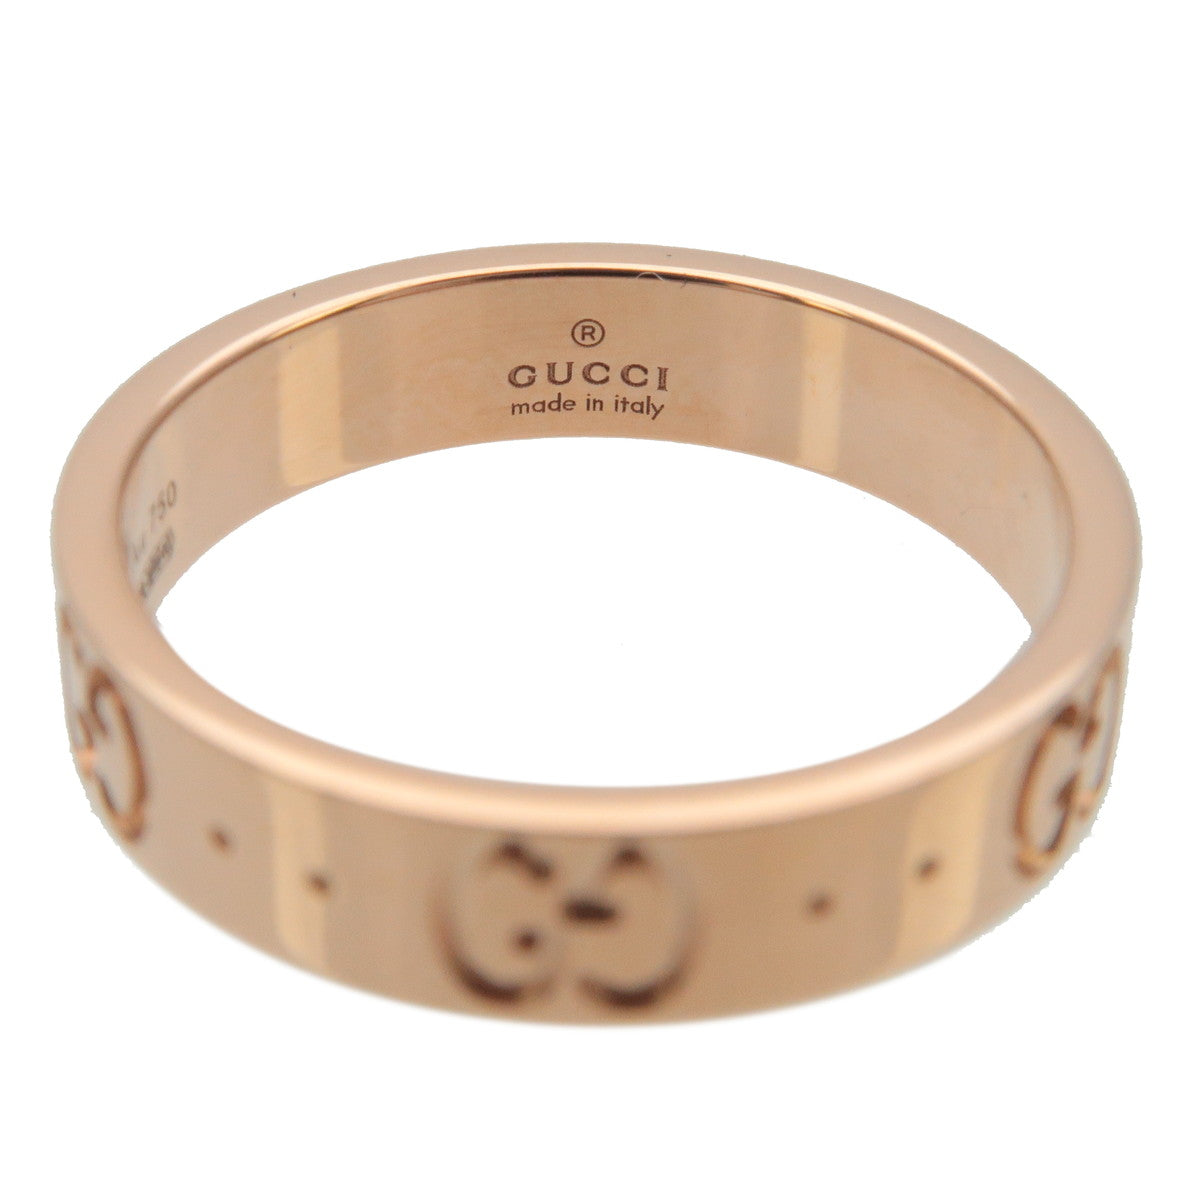 GUCCI ICON Ring K18 PG 750 Rose Gold #11 US5.5 HK12 EU51